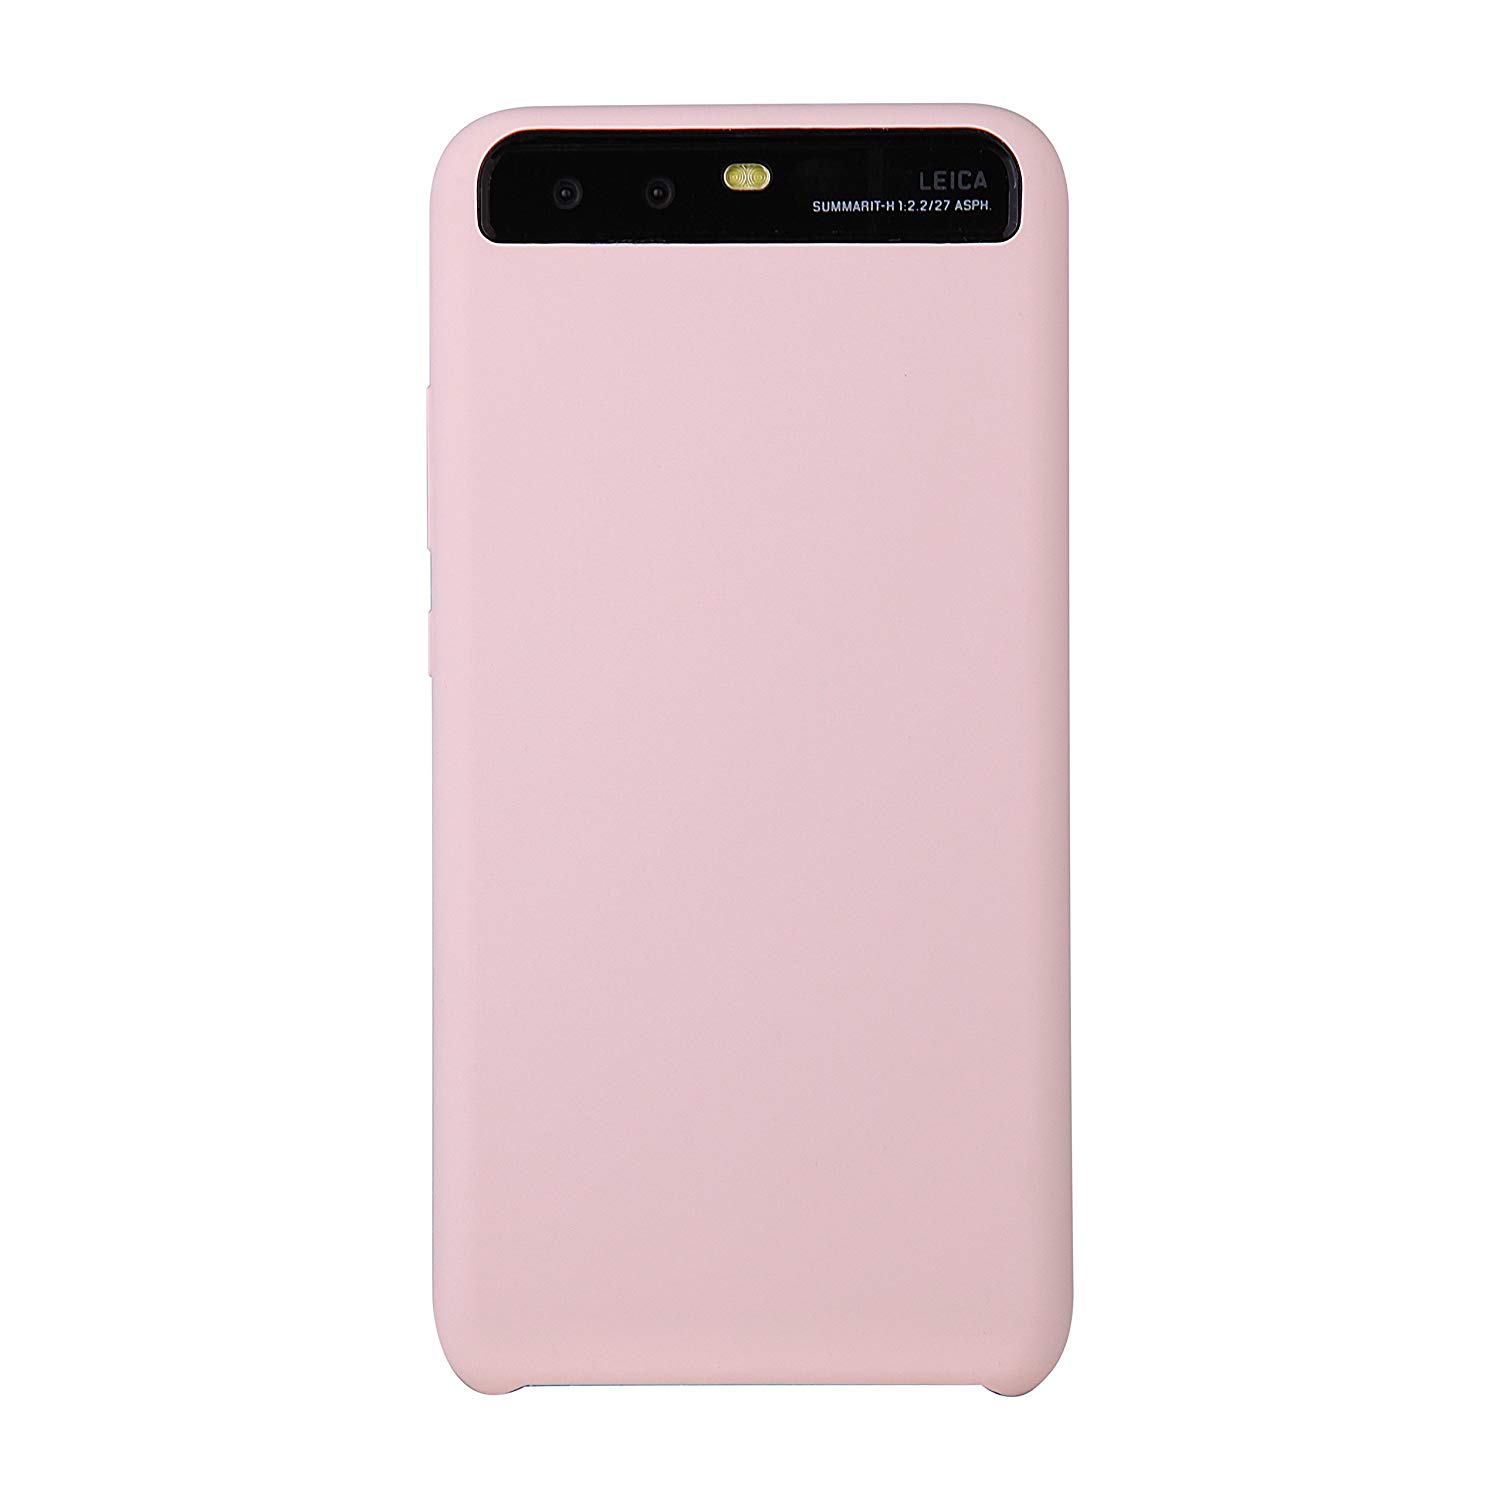 Peakally Funda Huawei P10 Plus, Peakally carcasa de silicona líquido para Huawei P10 Plus con almohadilla microfibra suave Forro de tela [Prueba de [Antideslizante] -Rosa